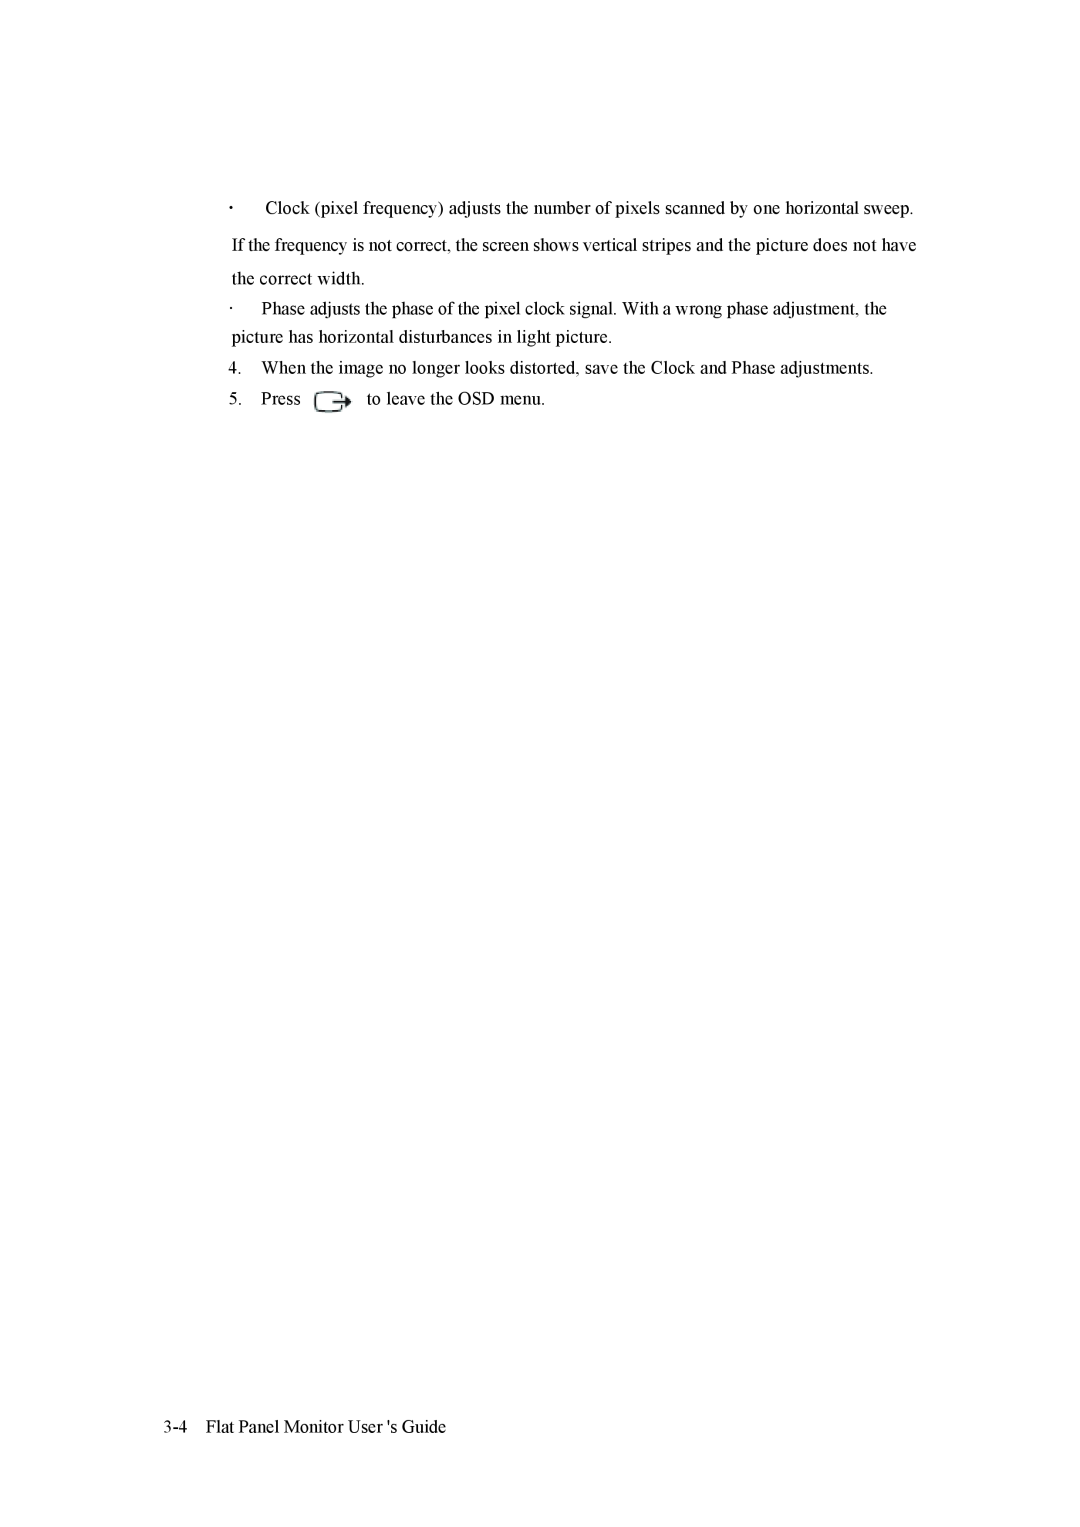 Lenovo L171 manual Press to leave the OSD menu, 3-4Flat Panel Monitor User s Guide 